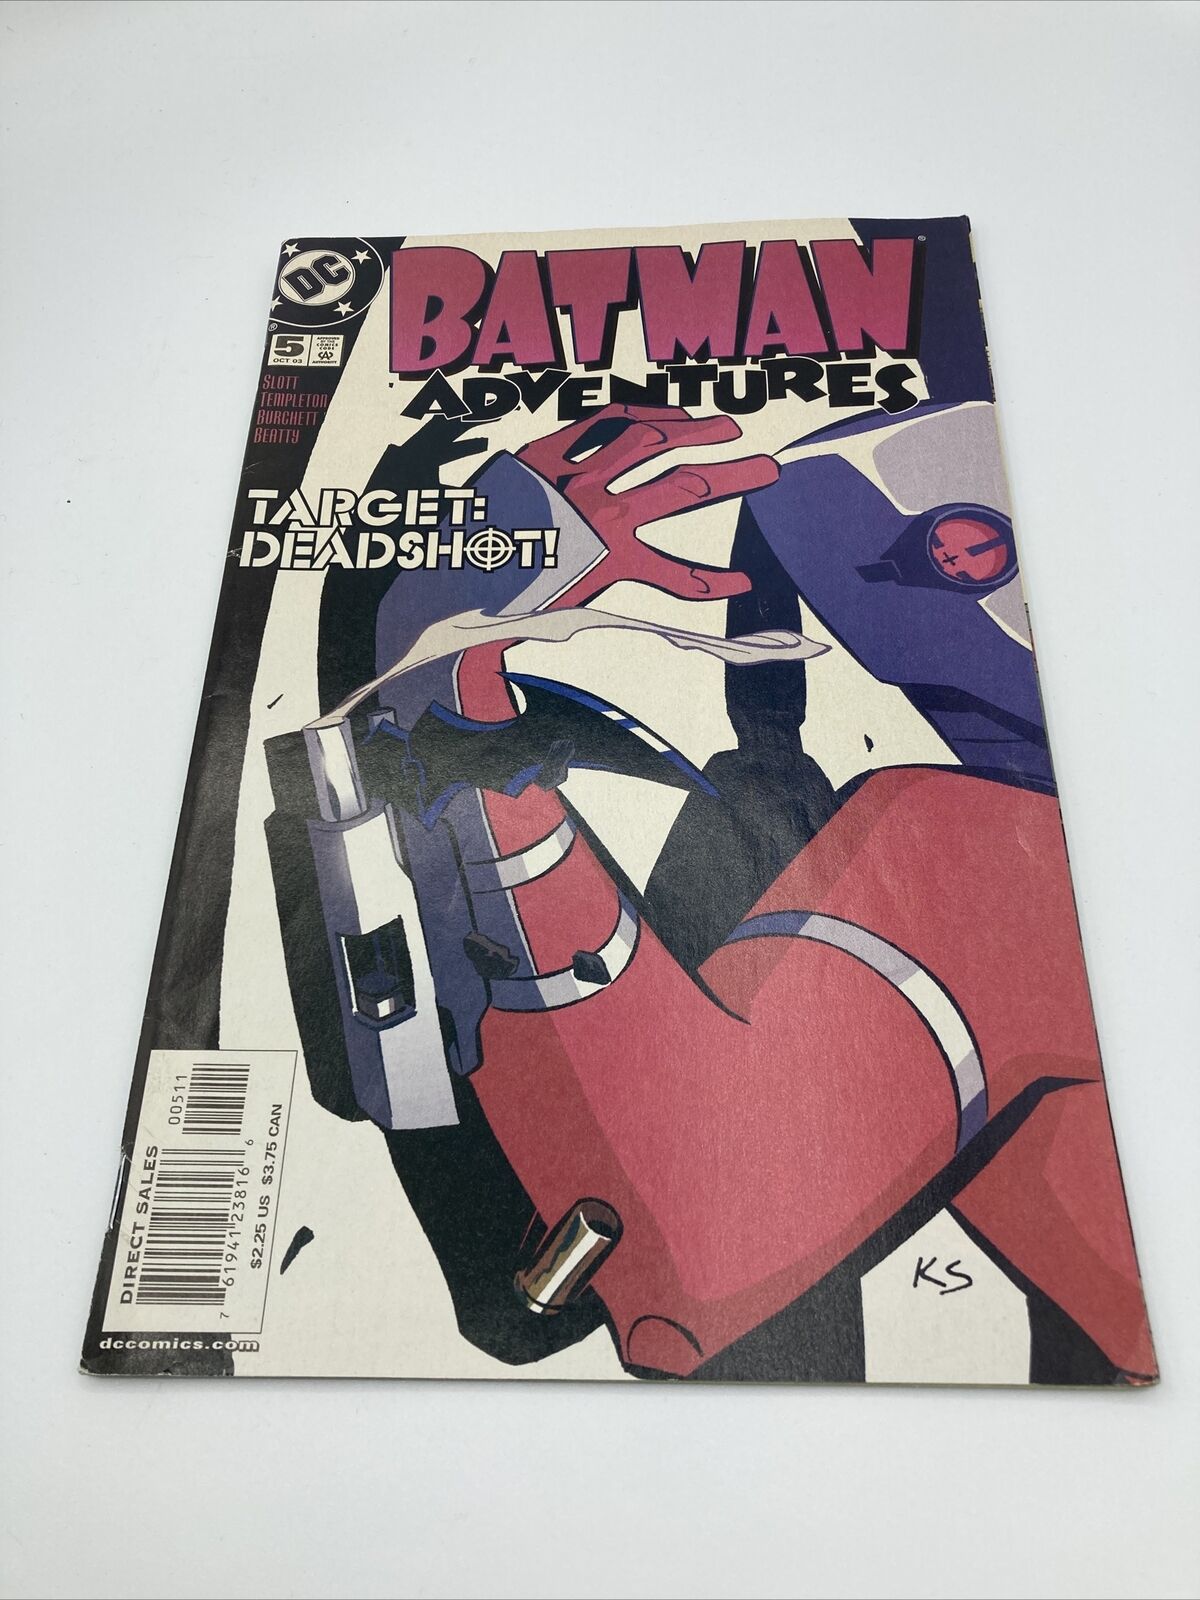 Batman Adventures #5 Target: Deadshot! (OCT 2003)  DC Comics